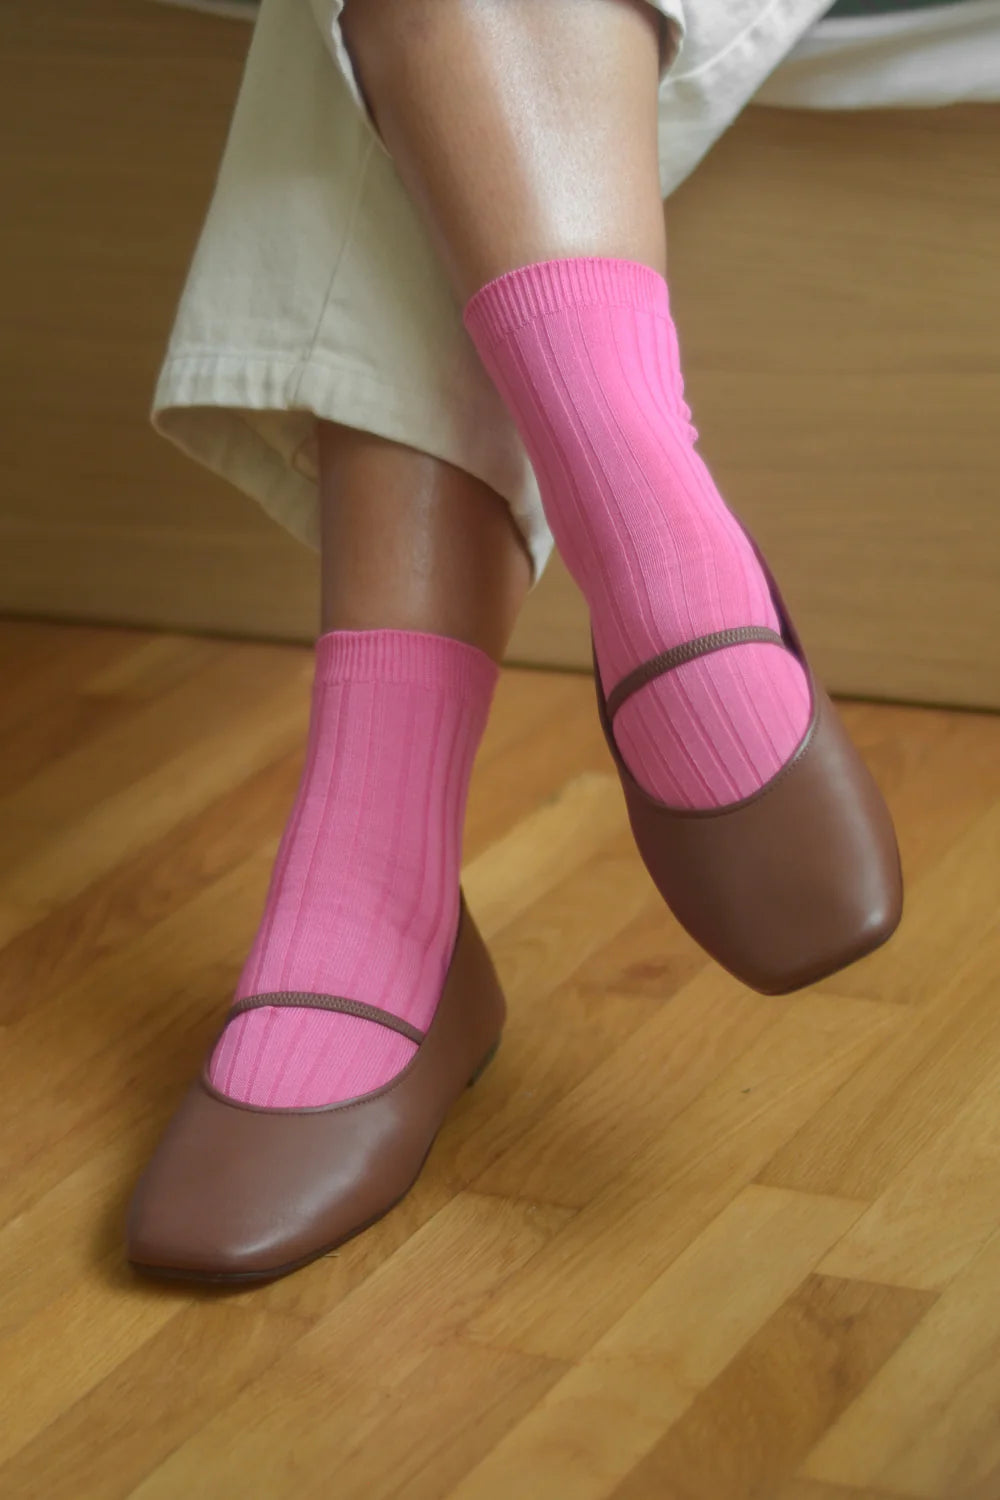 Her Socks Bright Pink